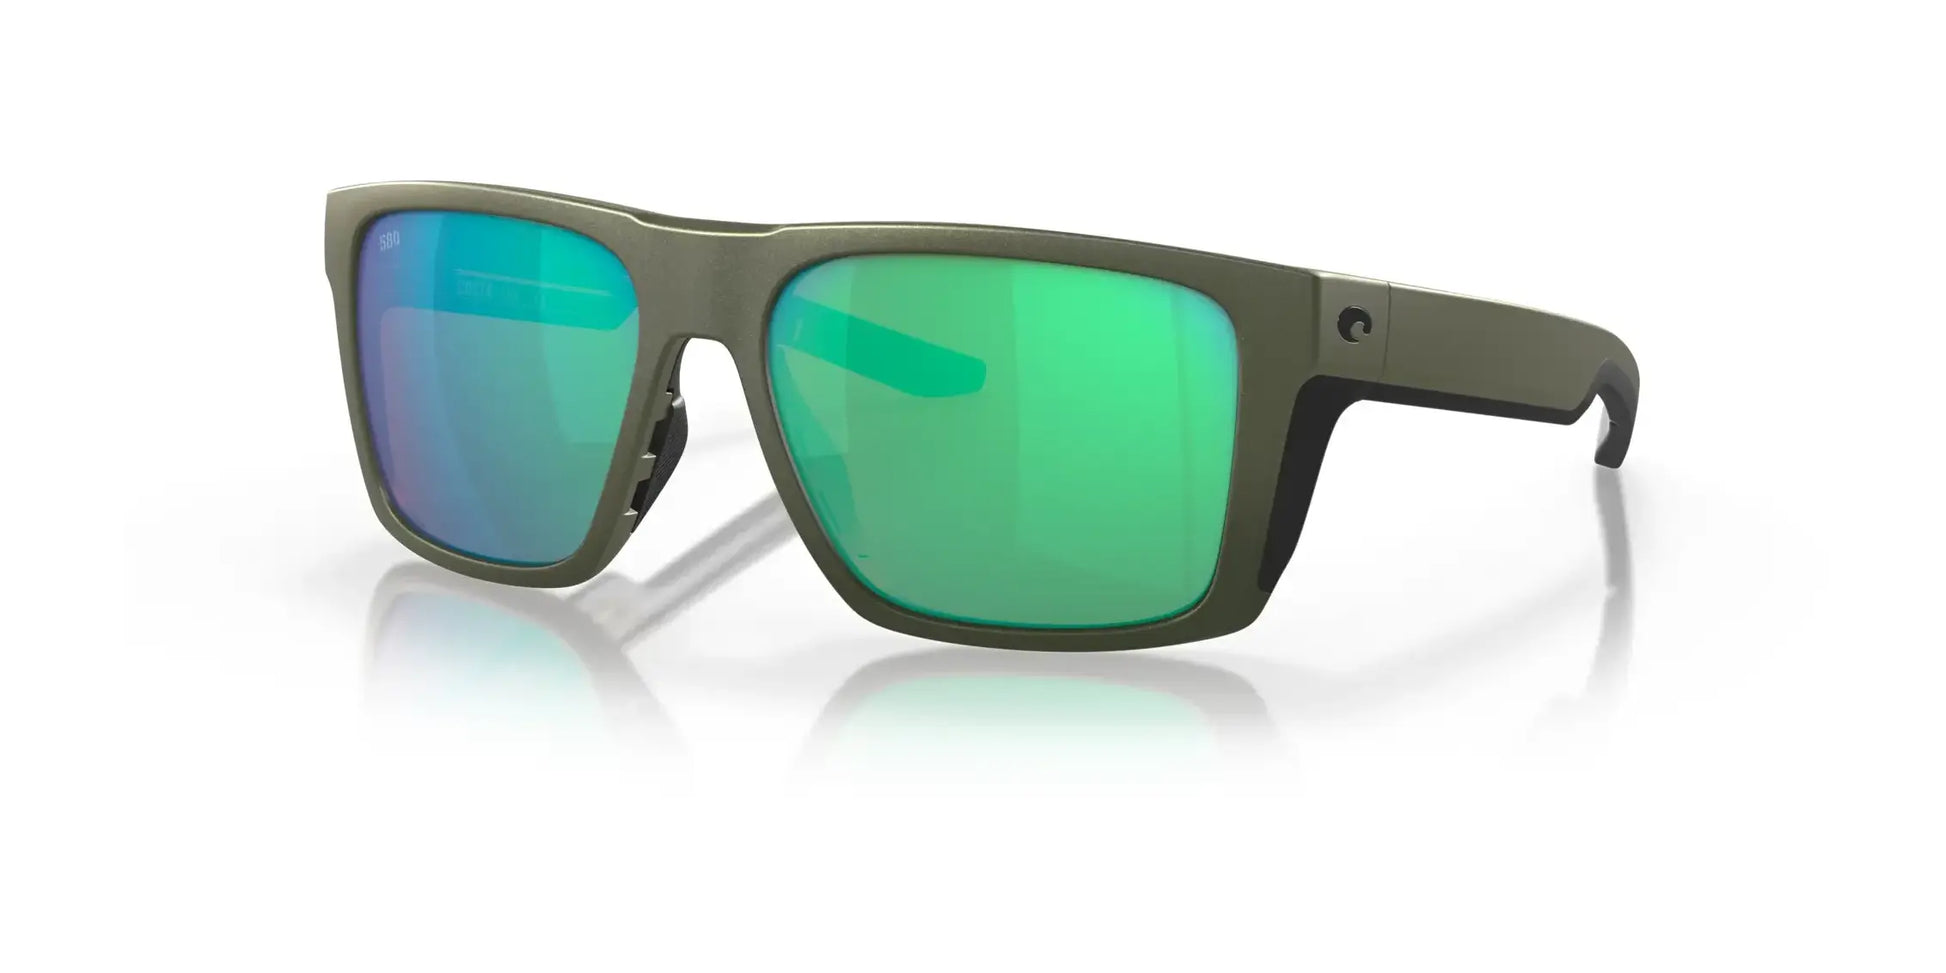 Costa LIDO 6S9104 Sunglasses Steel Gray Metallic / Green Mirror